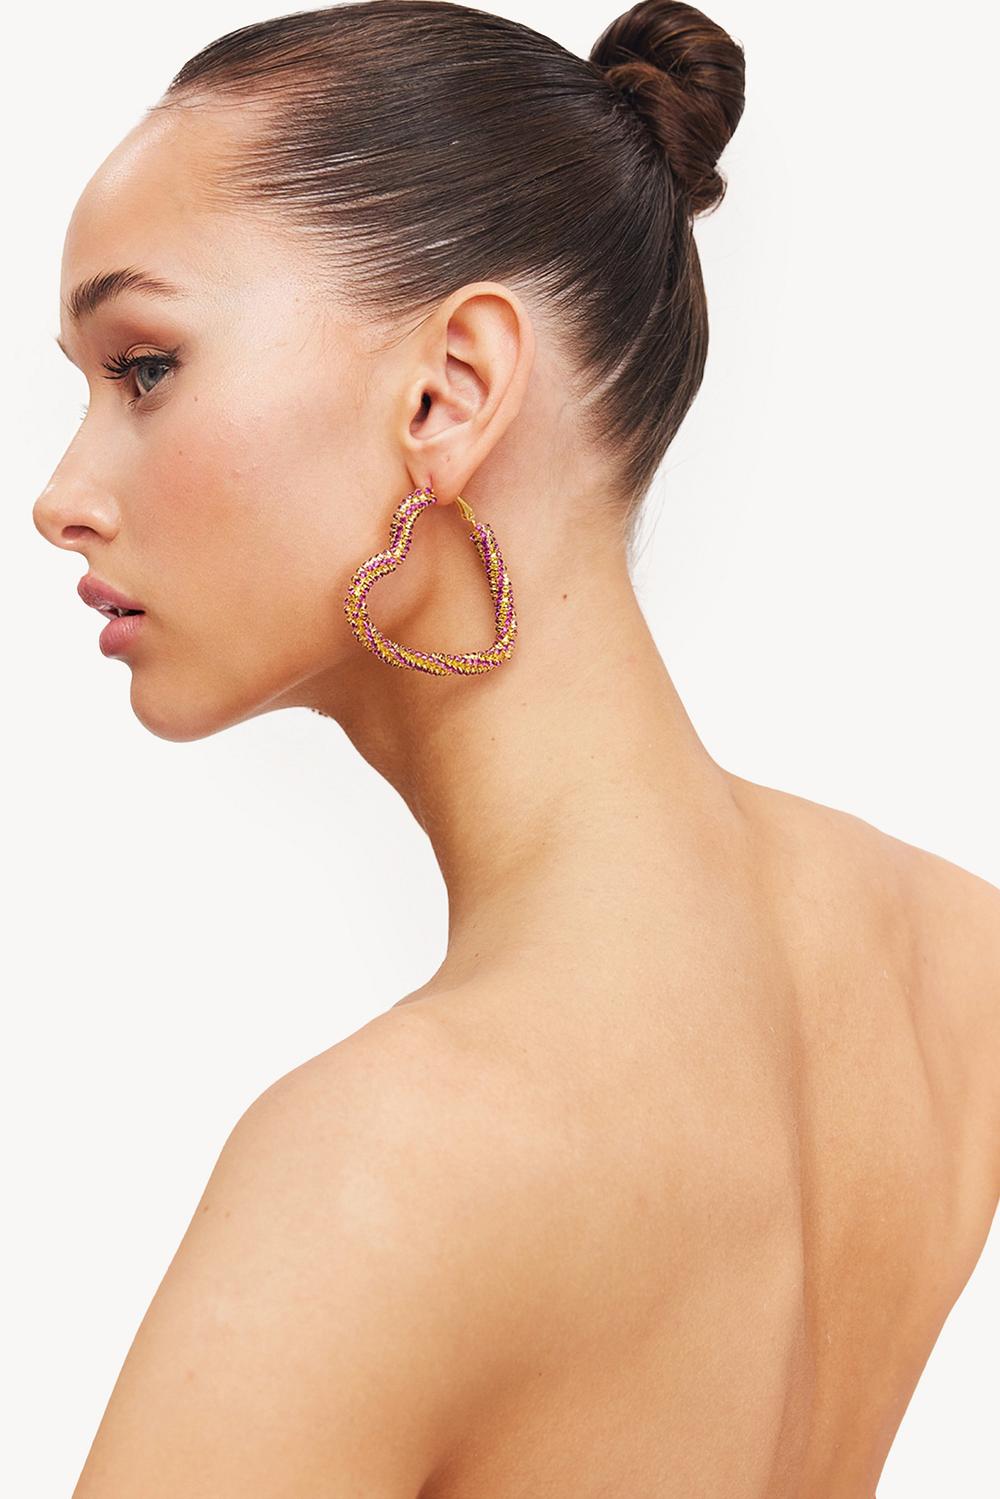 Golden earrings with pink rhinestones